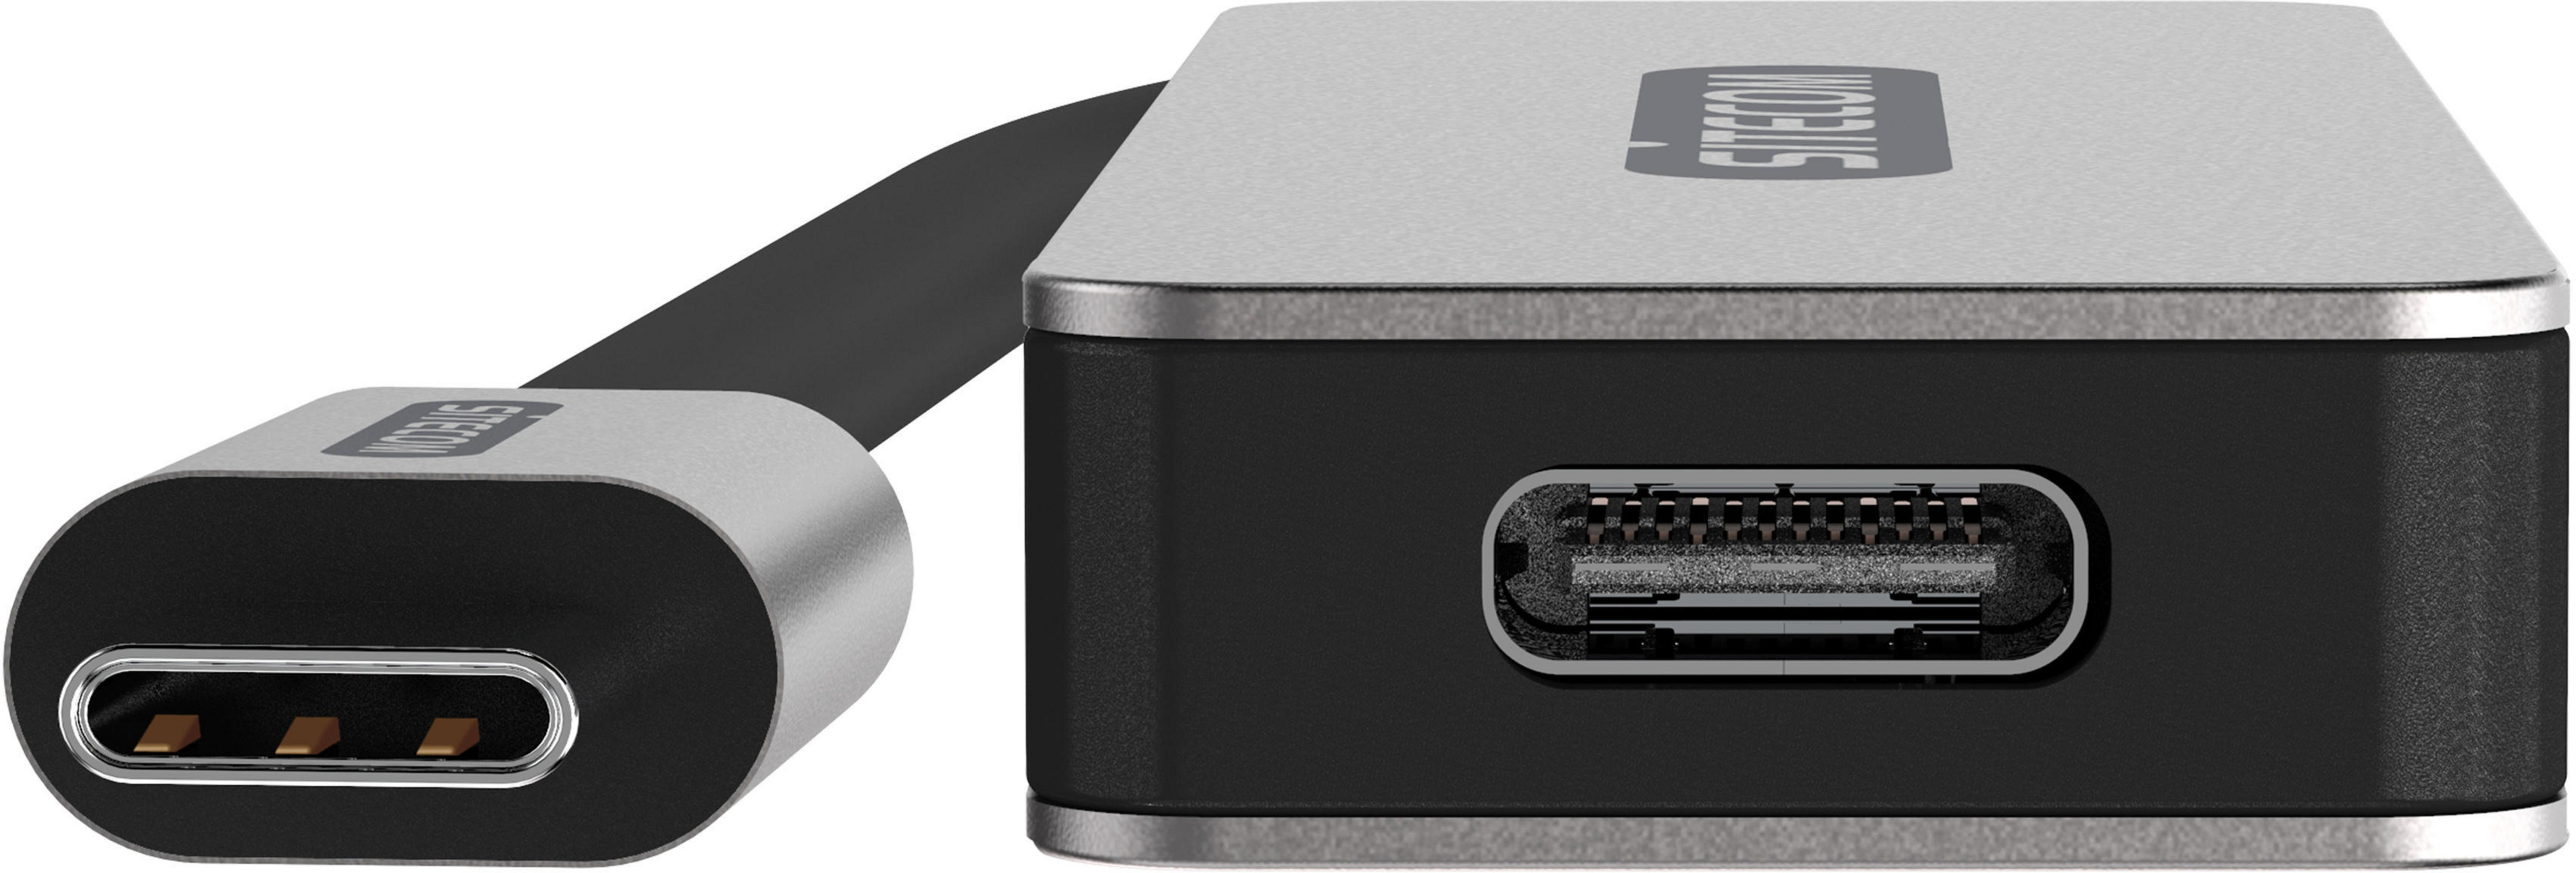 SITECOM CN-384 USB-C 2XUSB-A2XUSB-C HUB Hub, USB 3.1 Silber